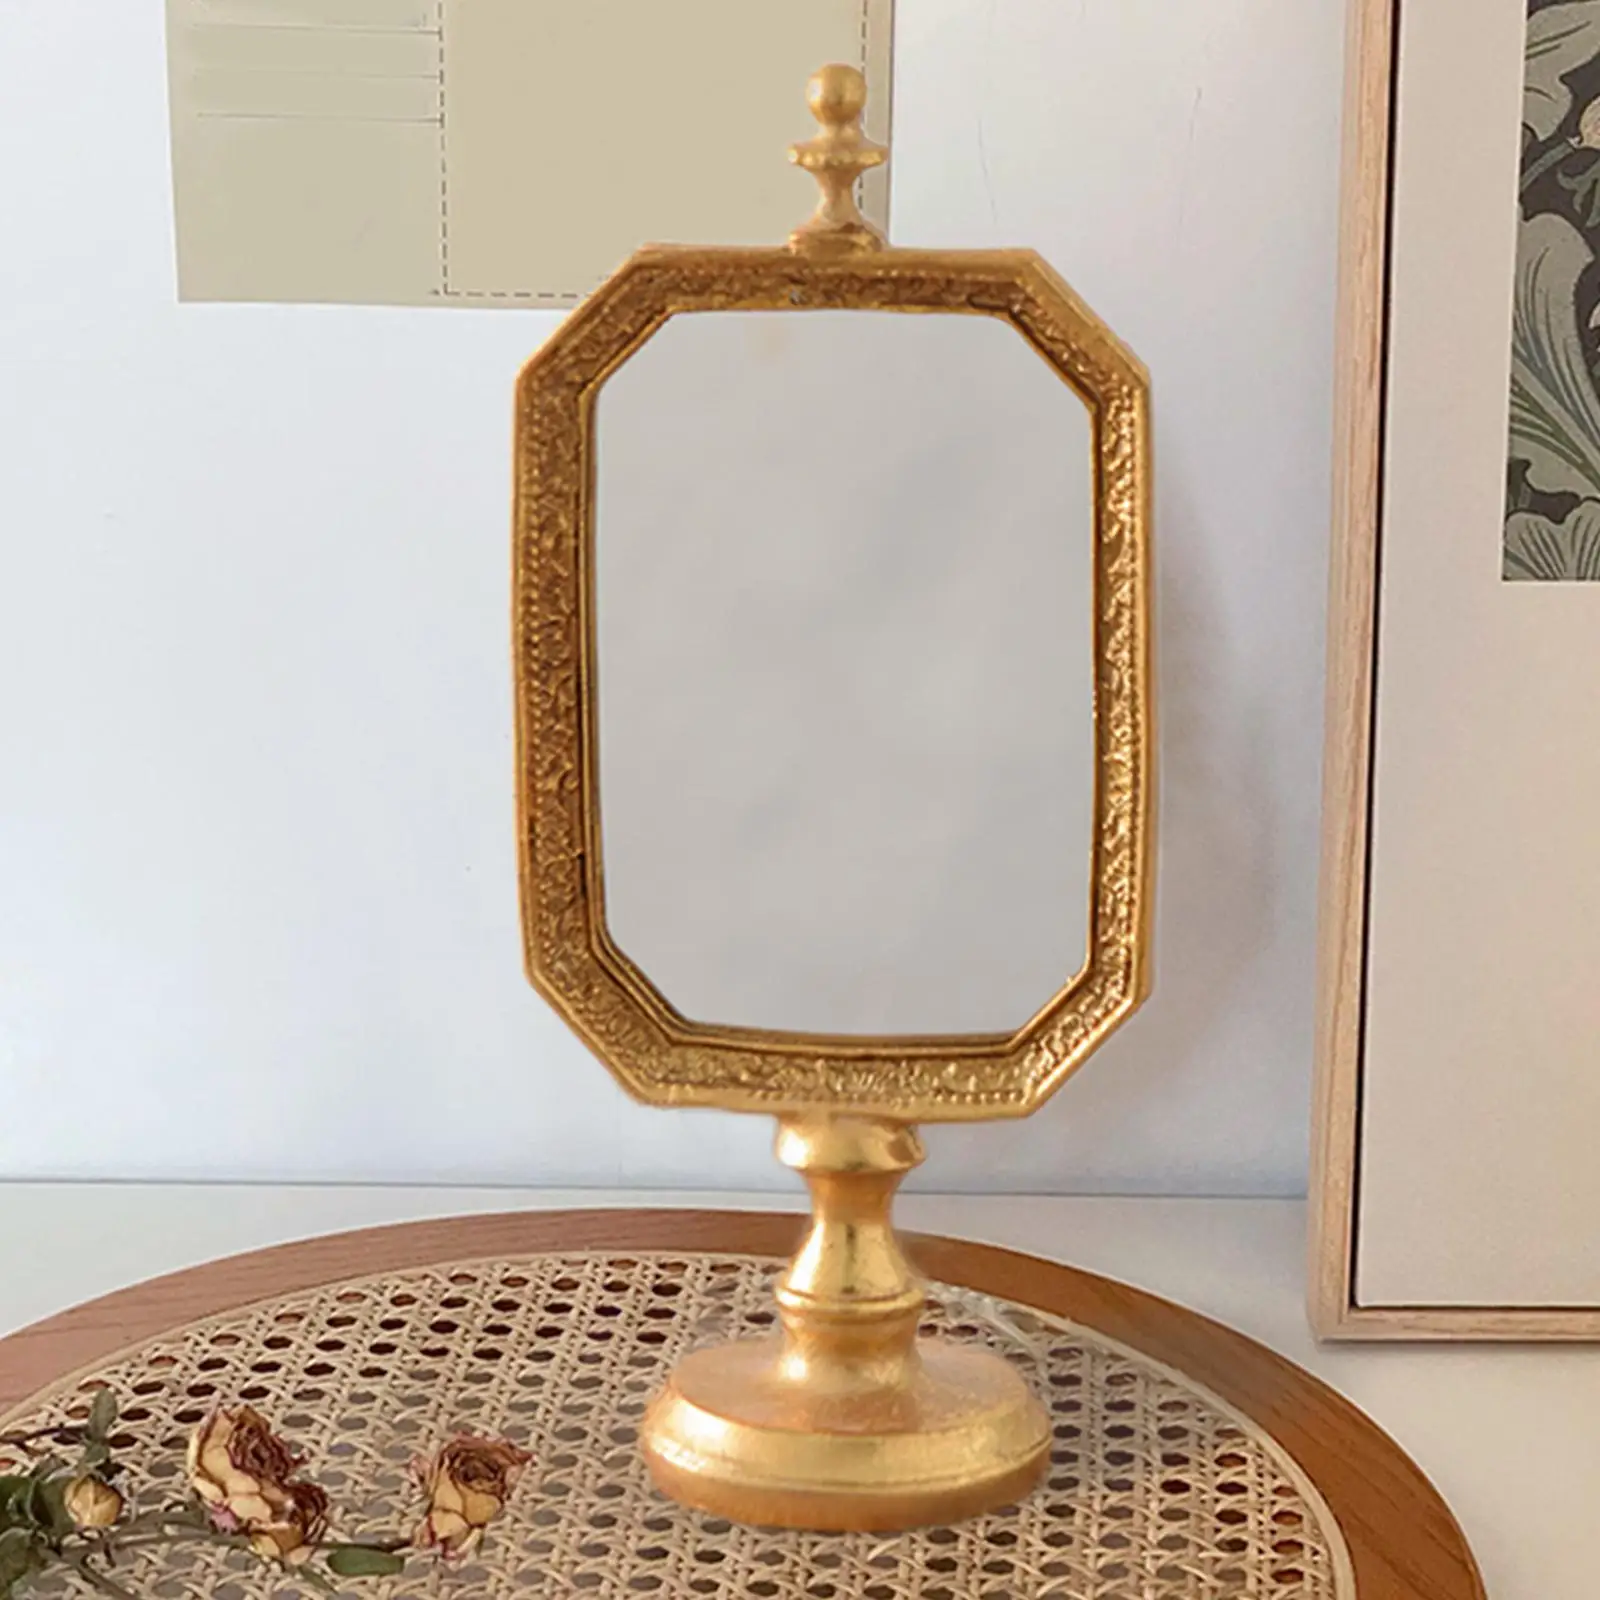 Vintage Style Vanity Mirror, Cosmtic Mirror Tabletop Mirror Makeup Mirror, for Tabletop